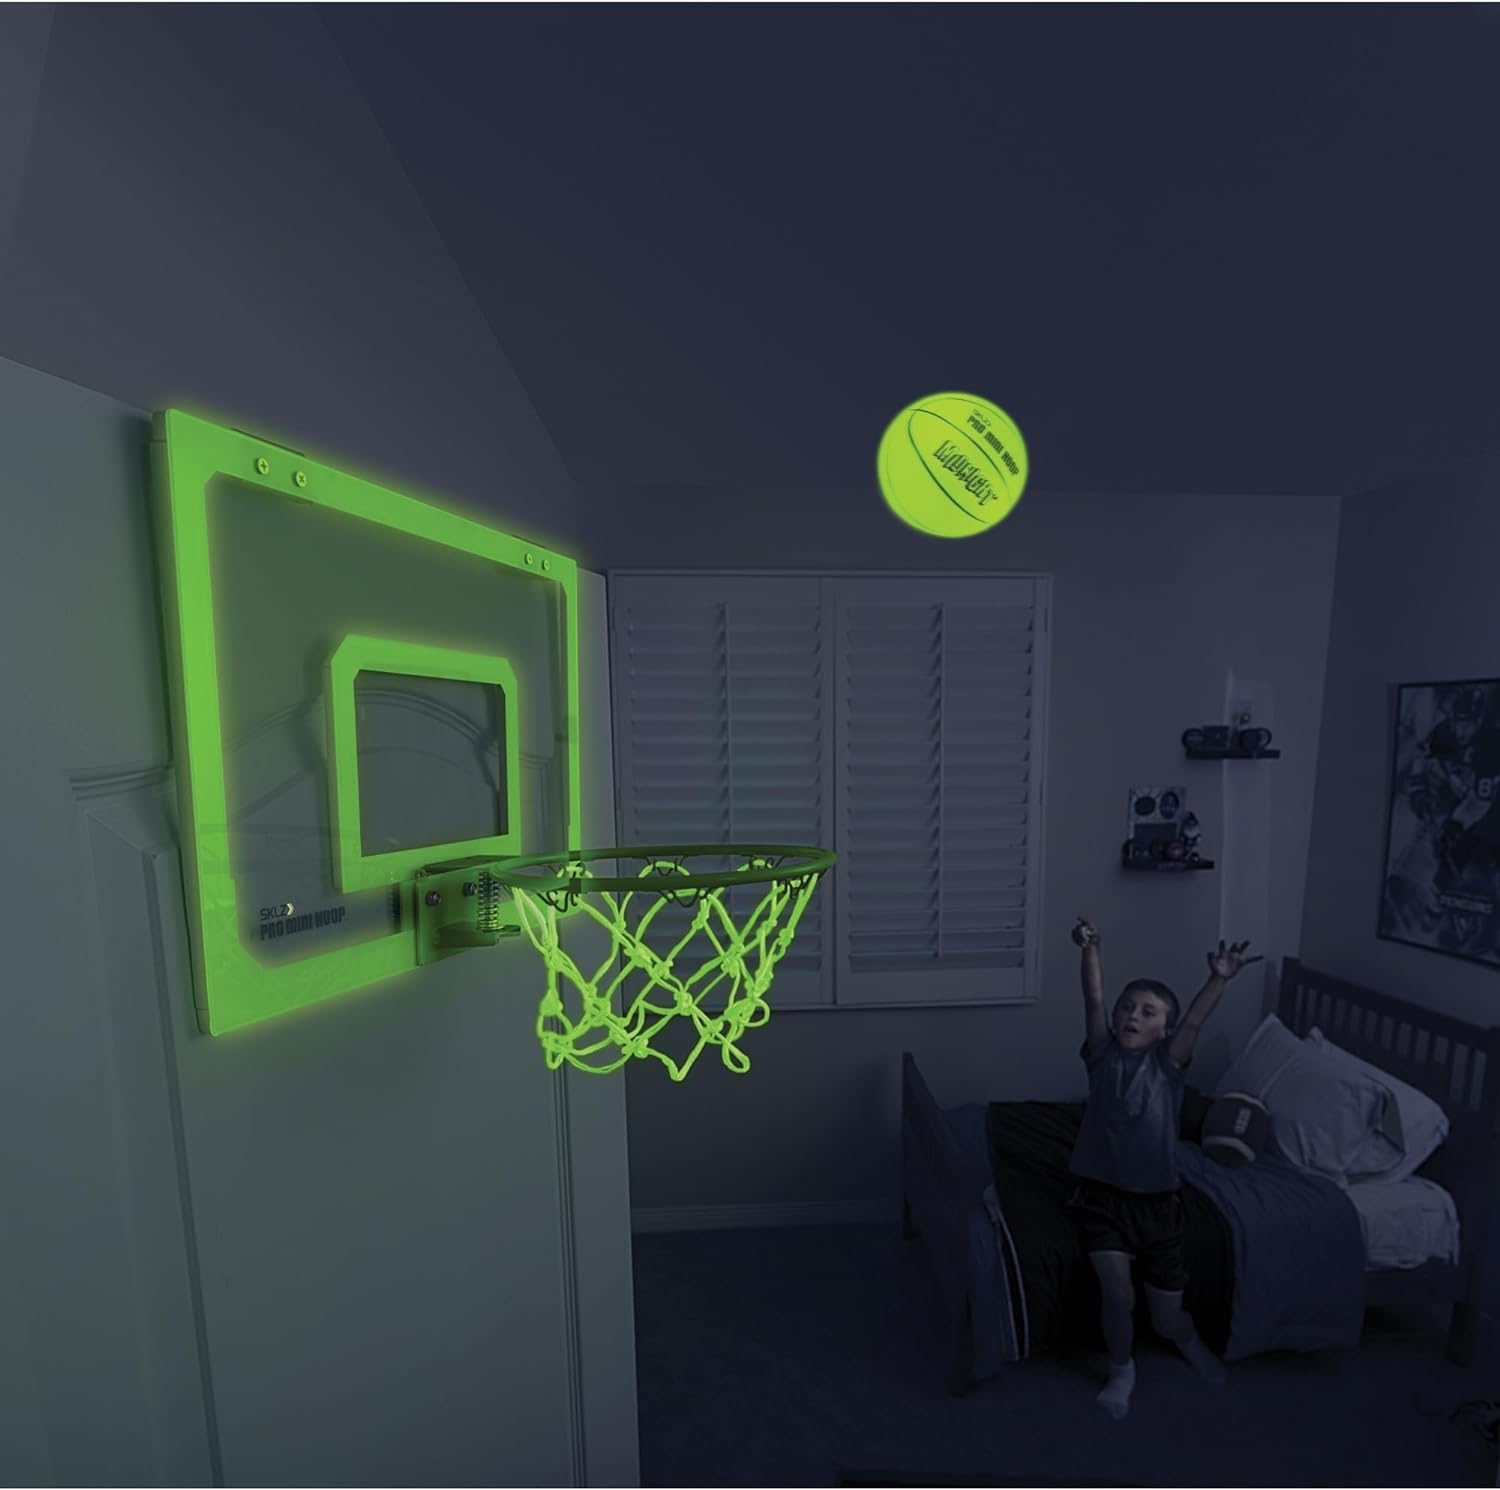 SKLZ Ballon de Basket Pro Mini Hoop - fitnessterapy